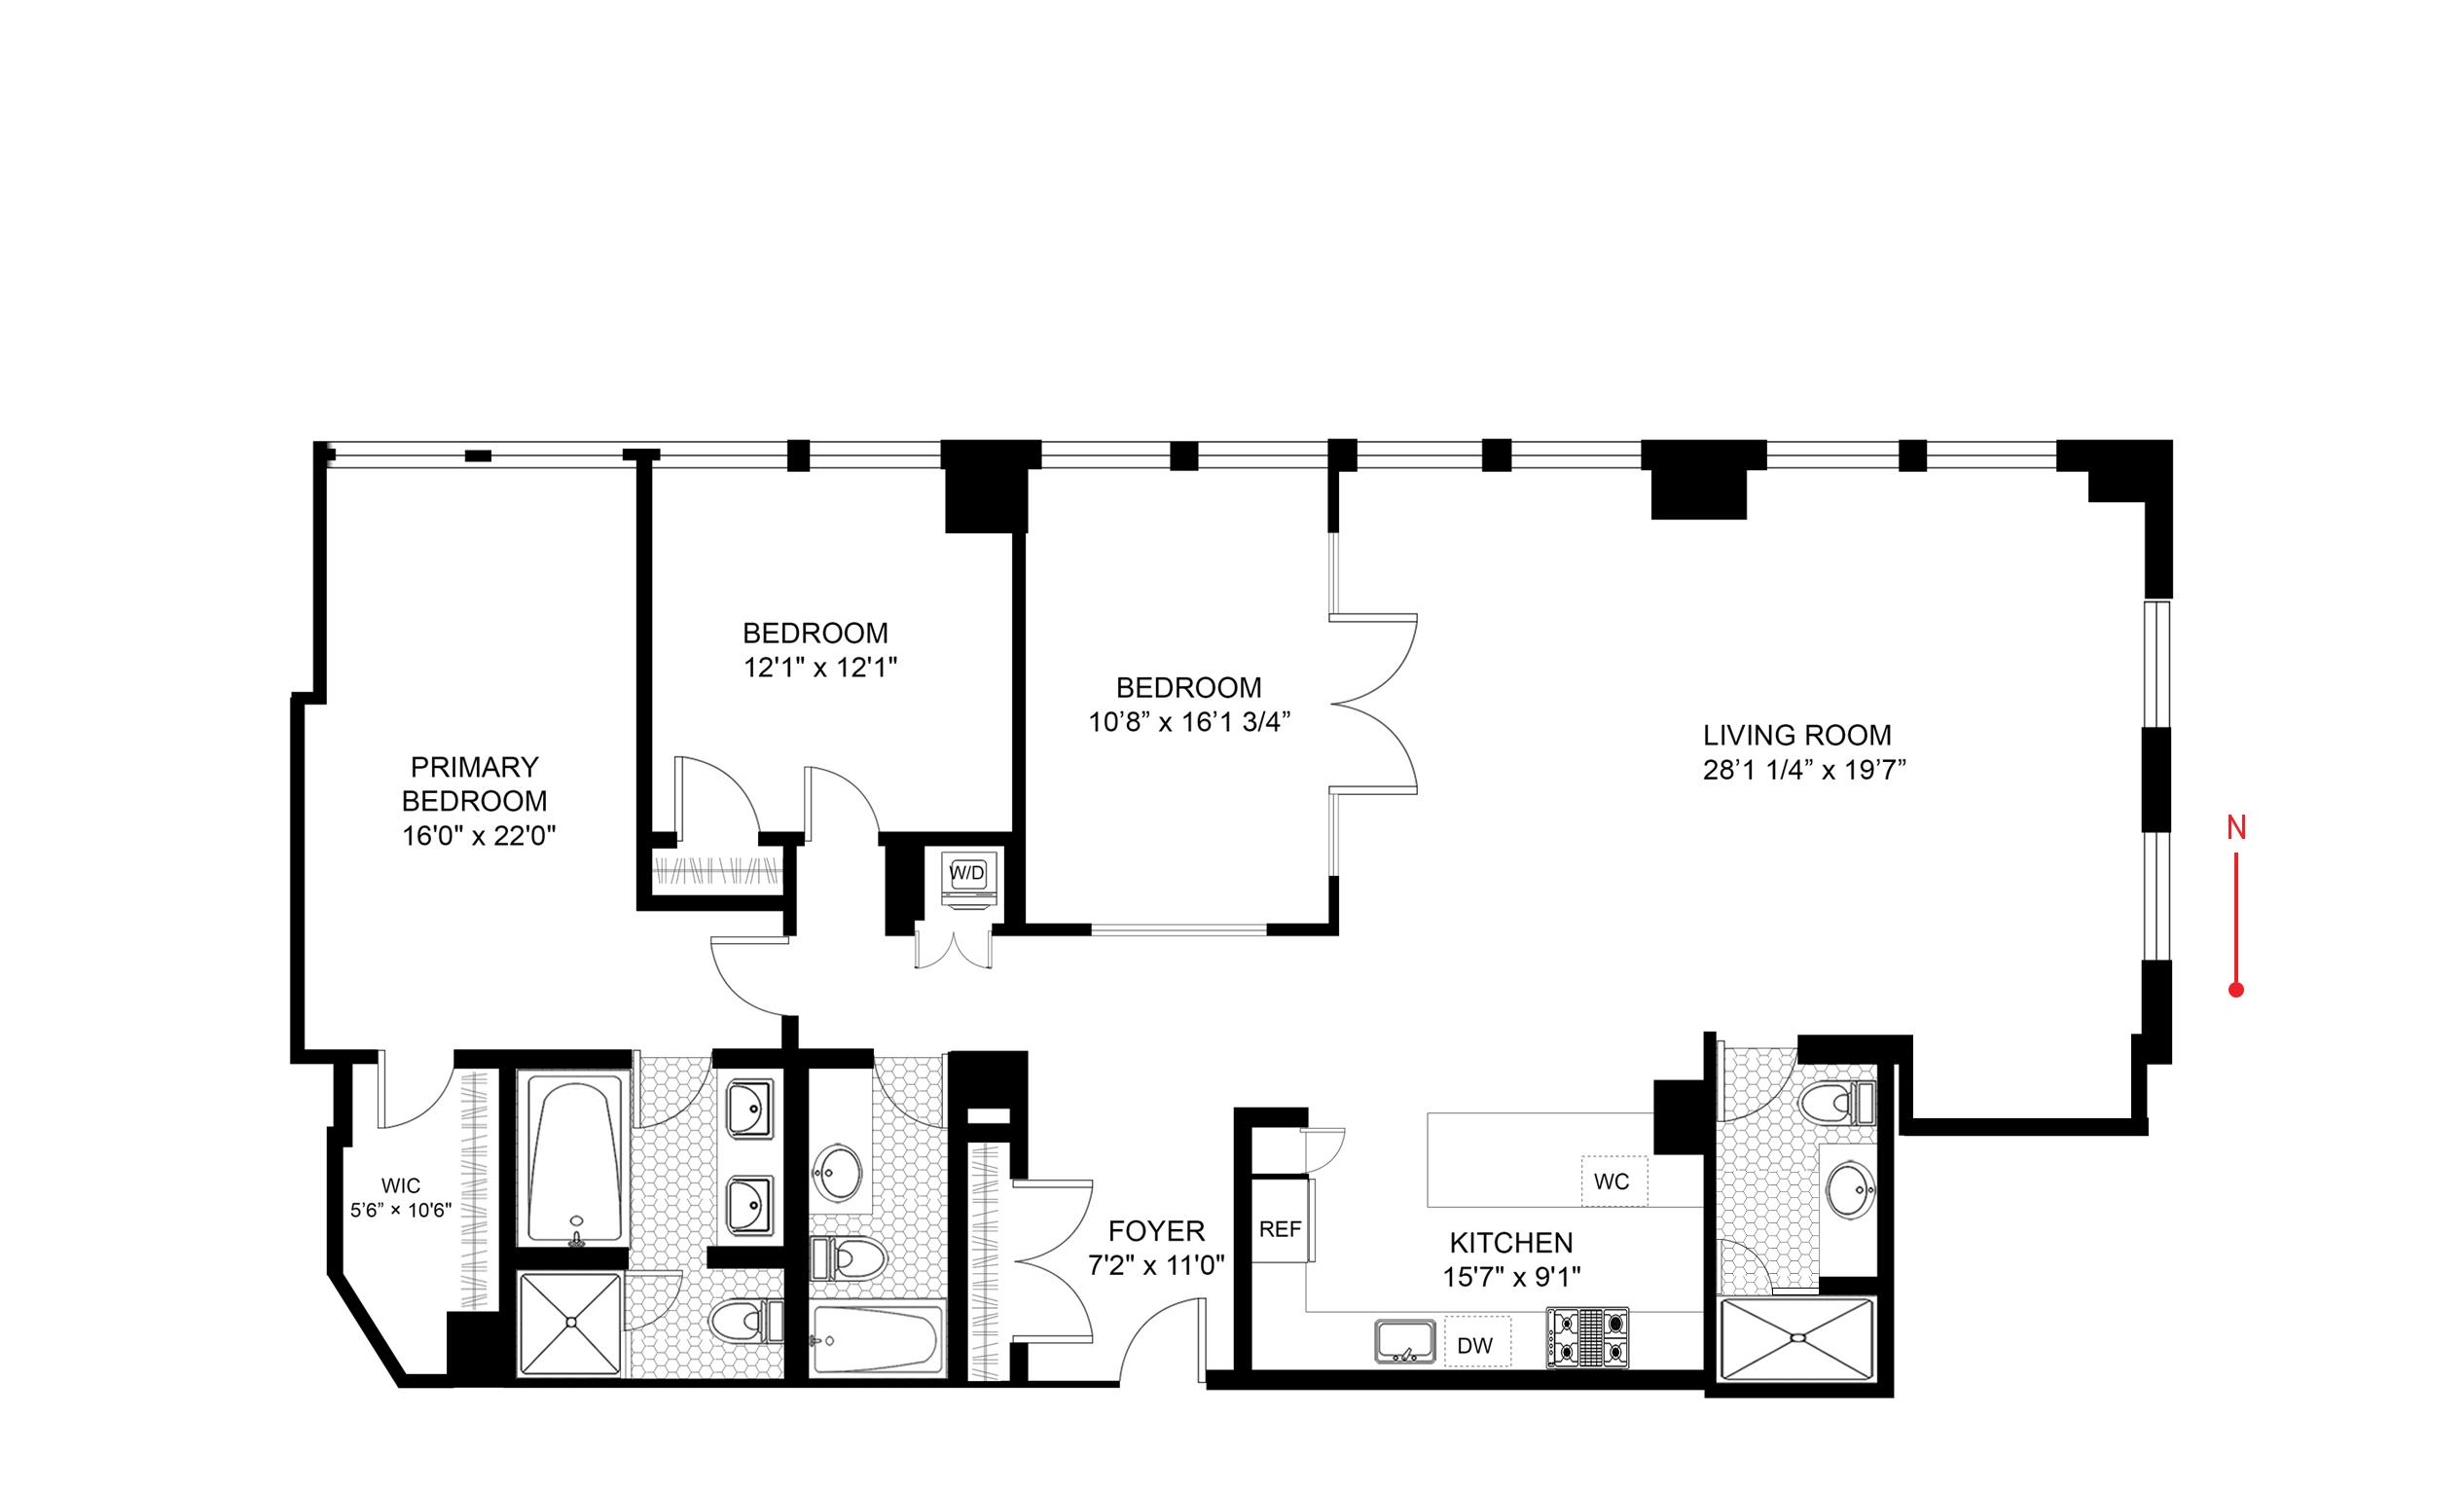 Floorplan for 130 West 30th Street, 11-C